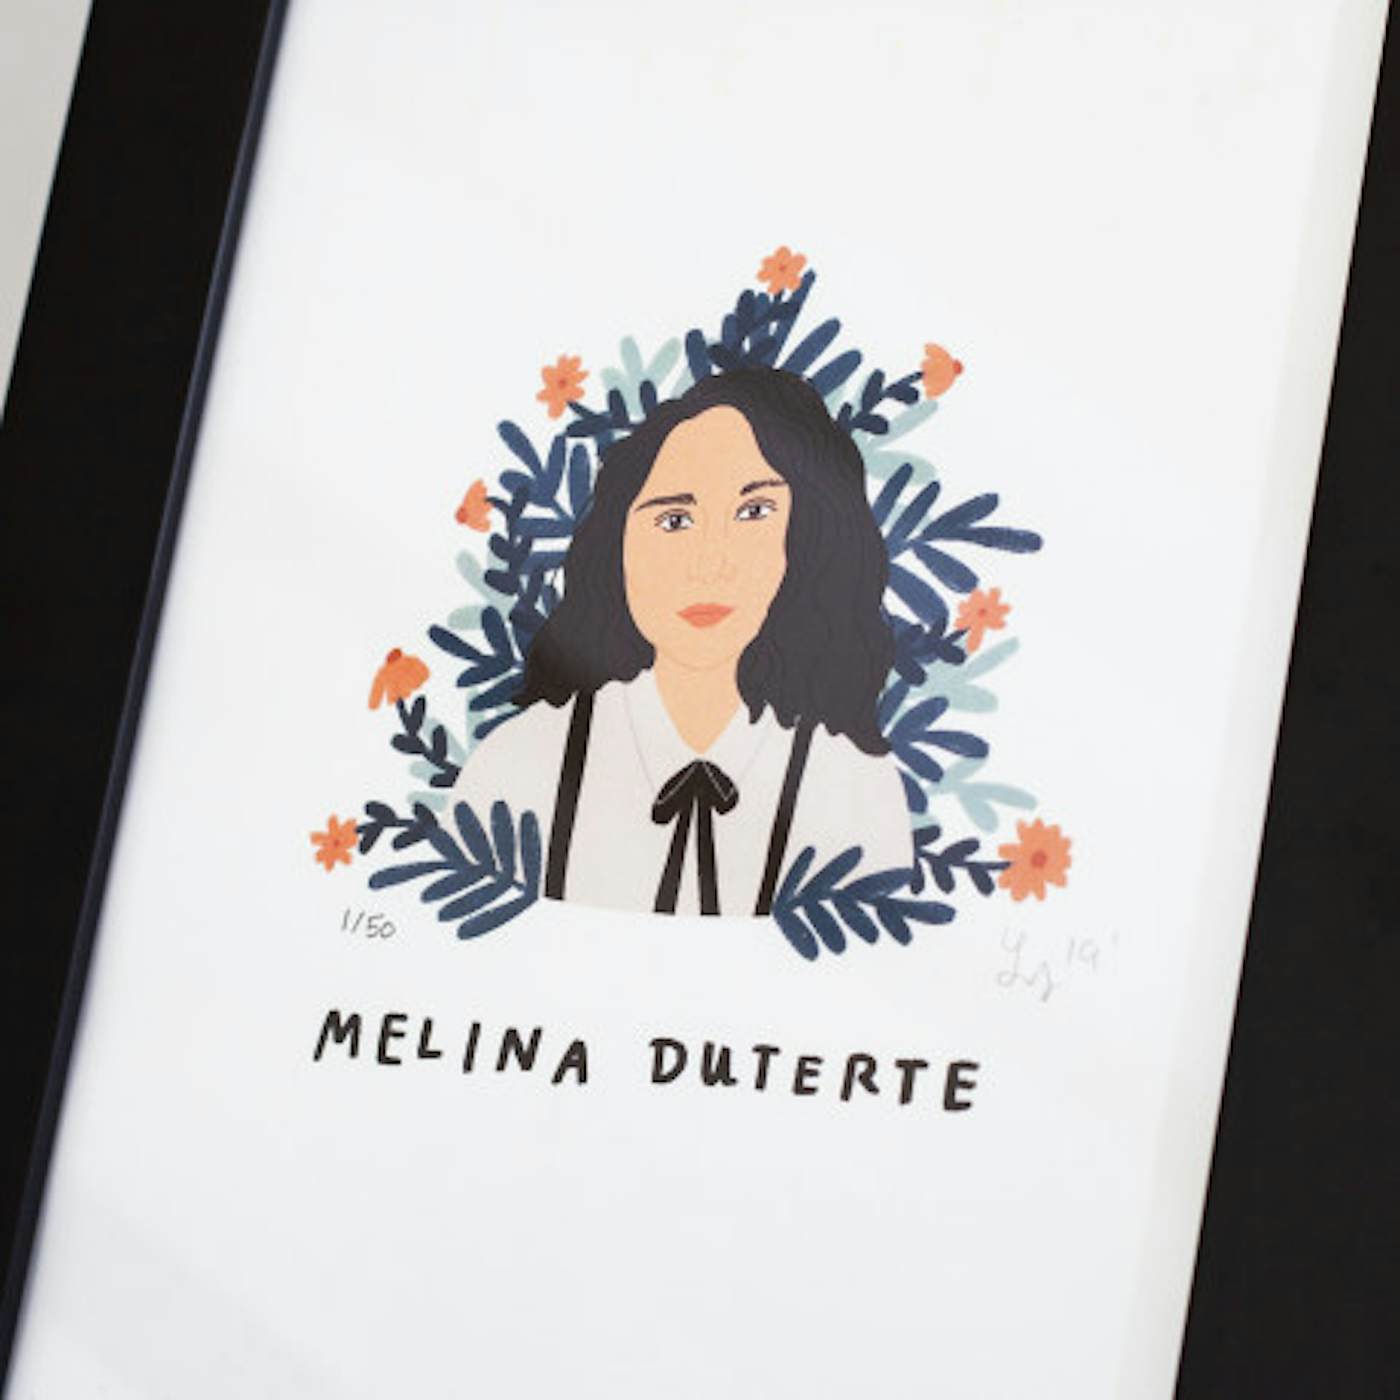 Melina Duterte (Jay Som) Art Print (8"x10")